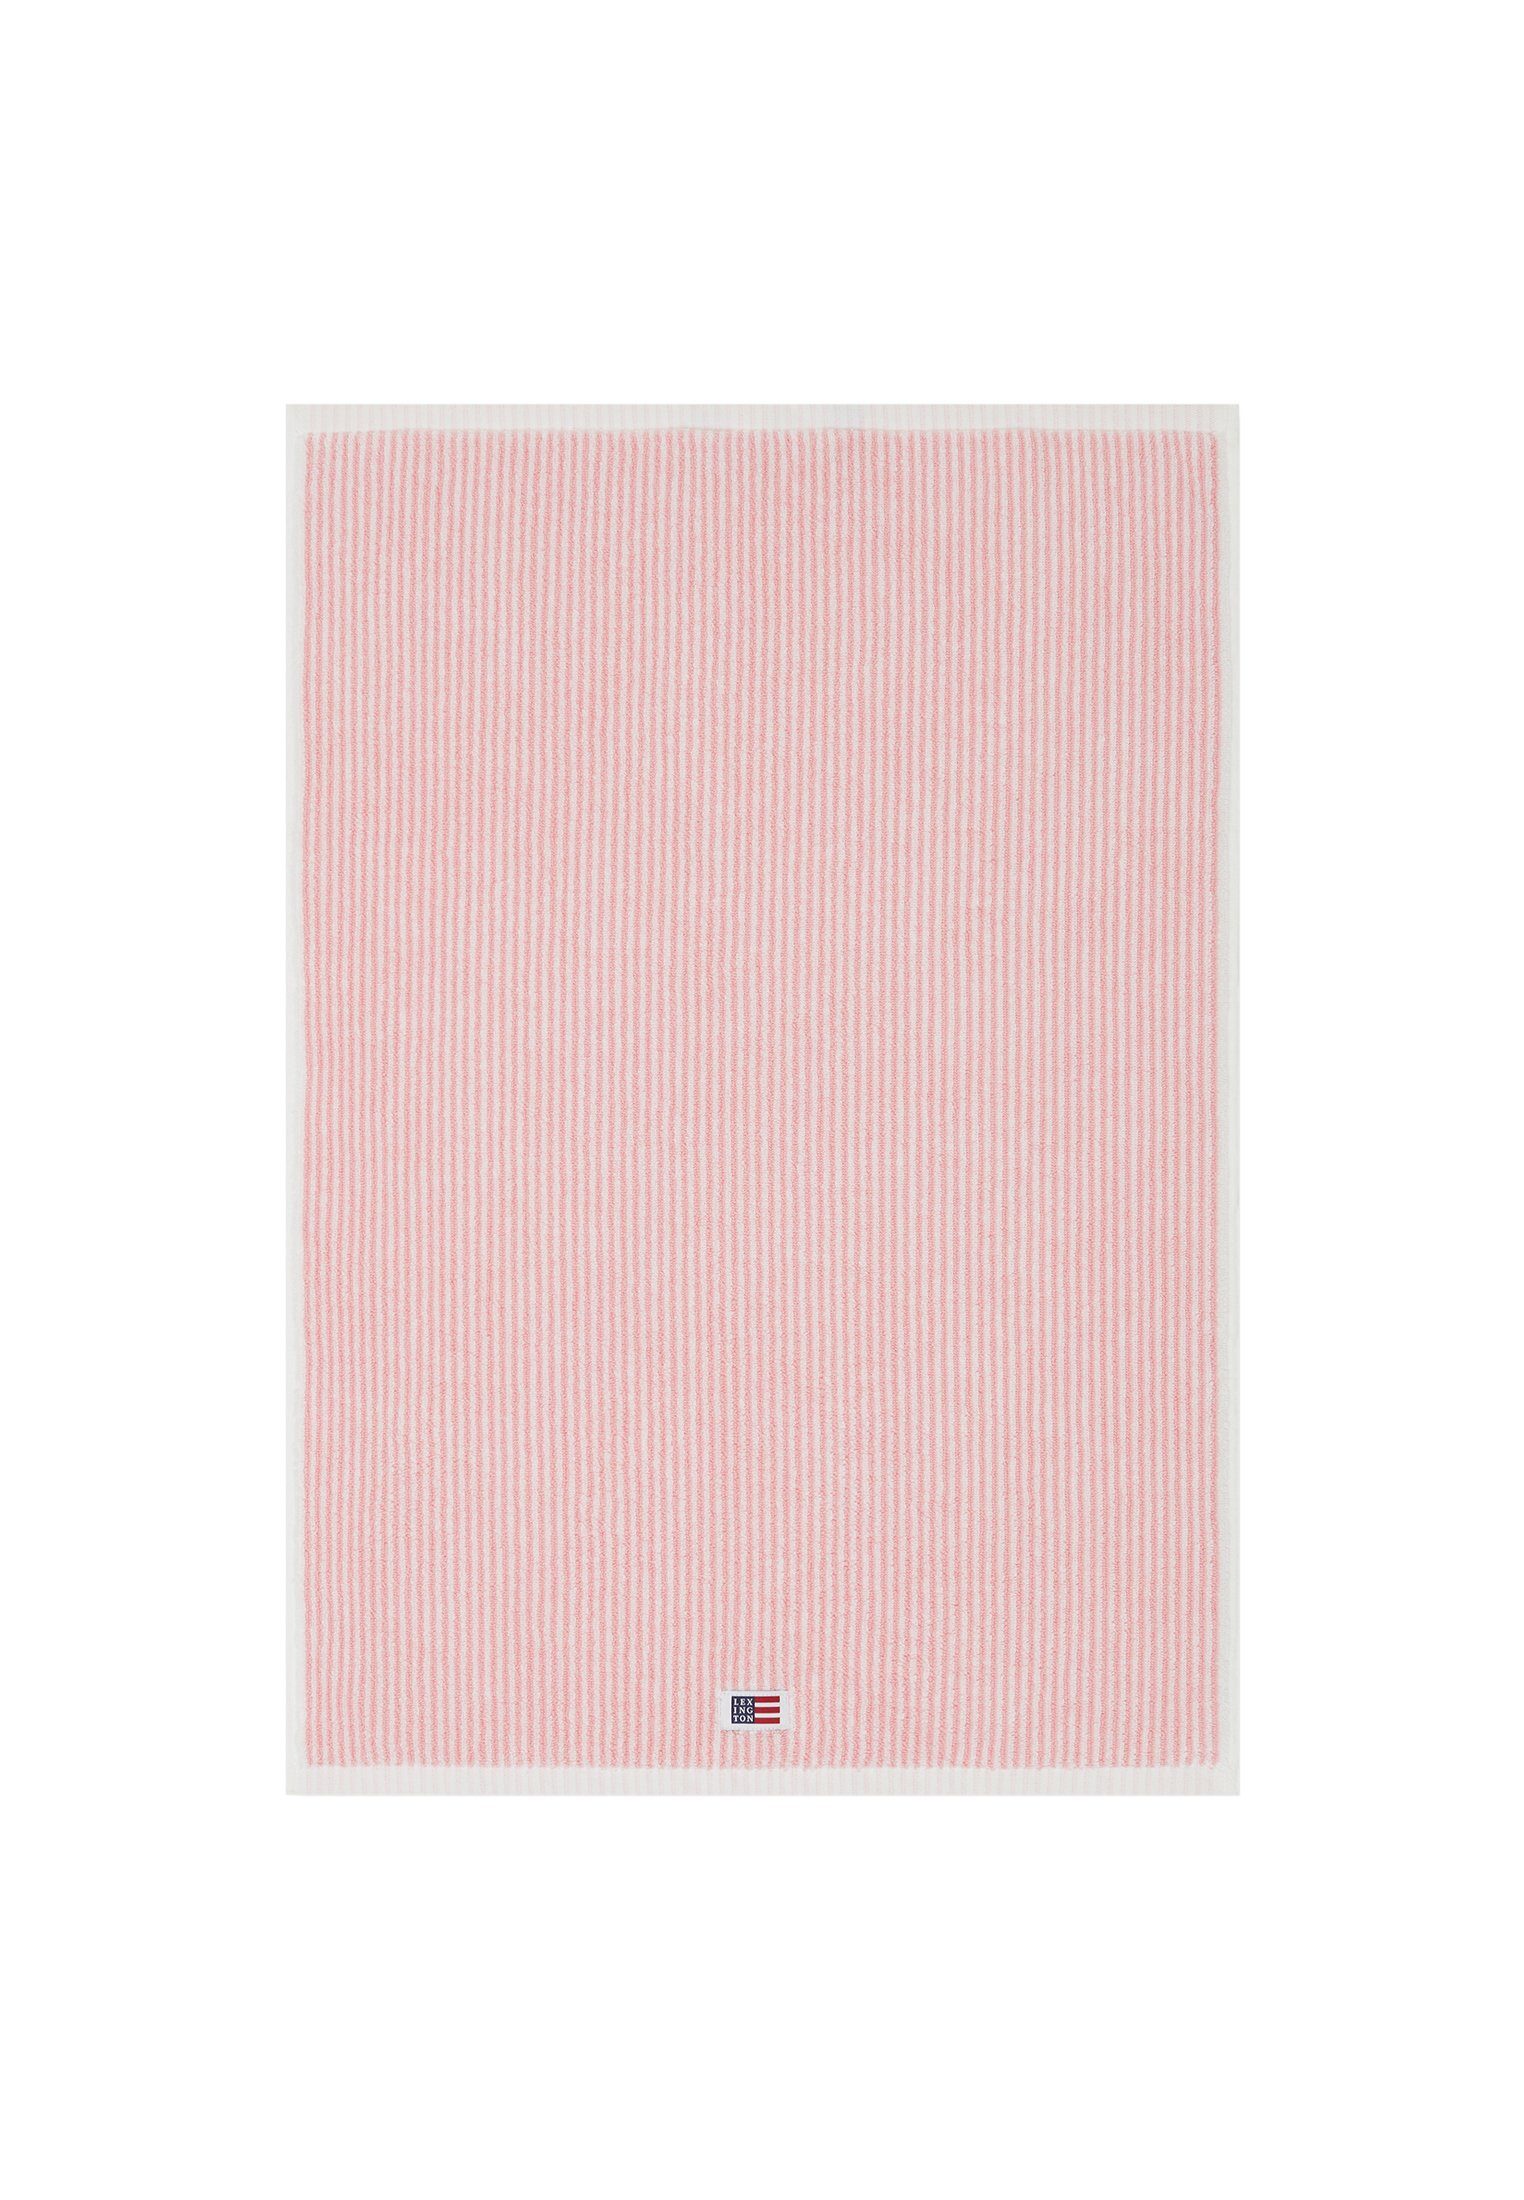 Lexington Handtuch Original Towel petunia pink/white